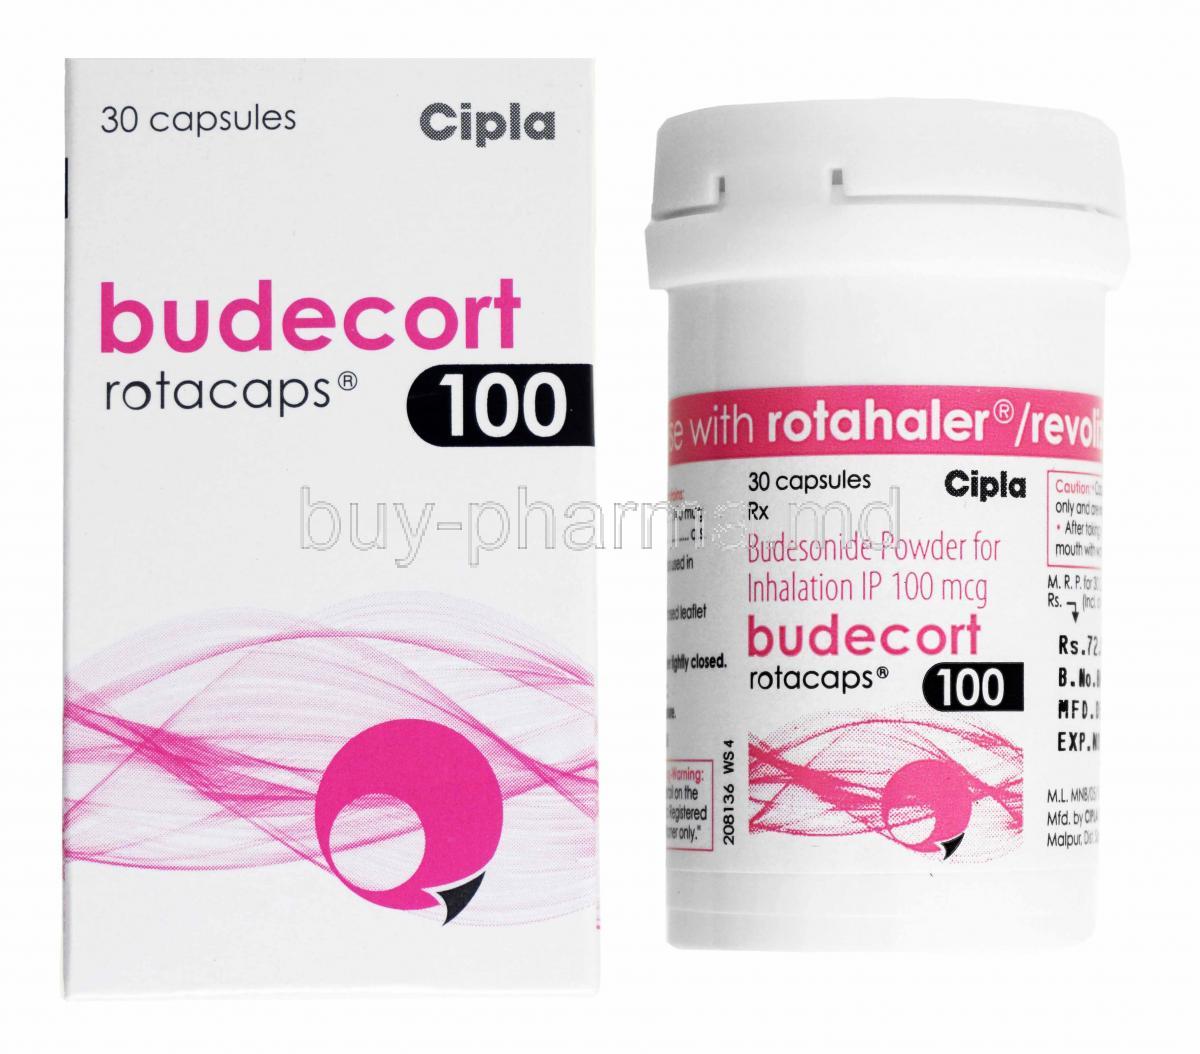 Budecort Rotacap, Budesonide 100mcg box and capsule bottle